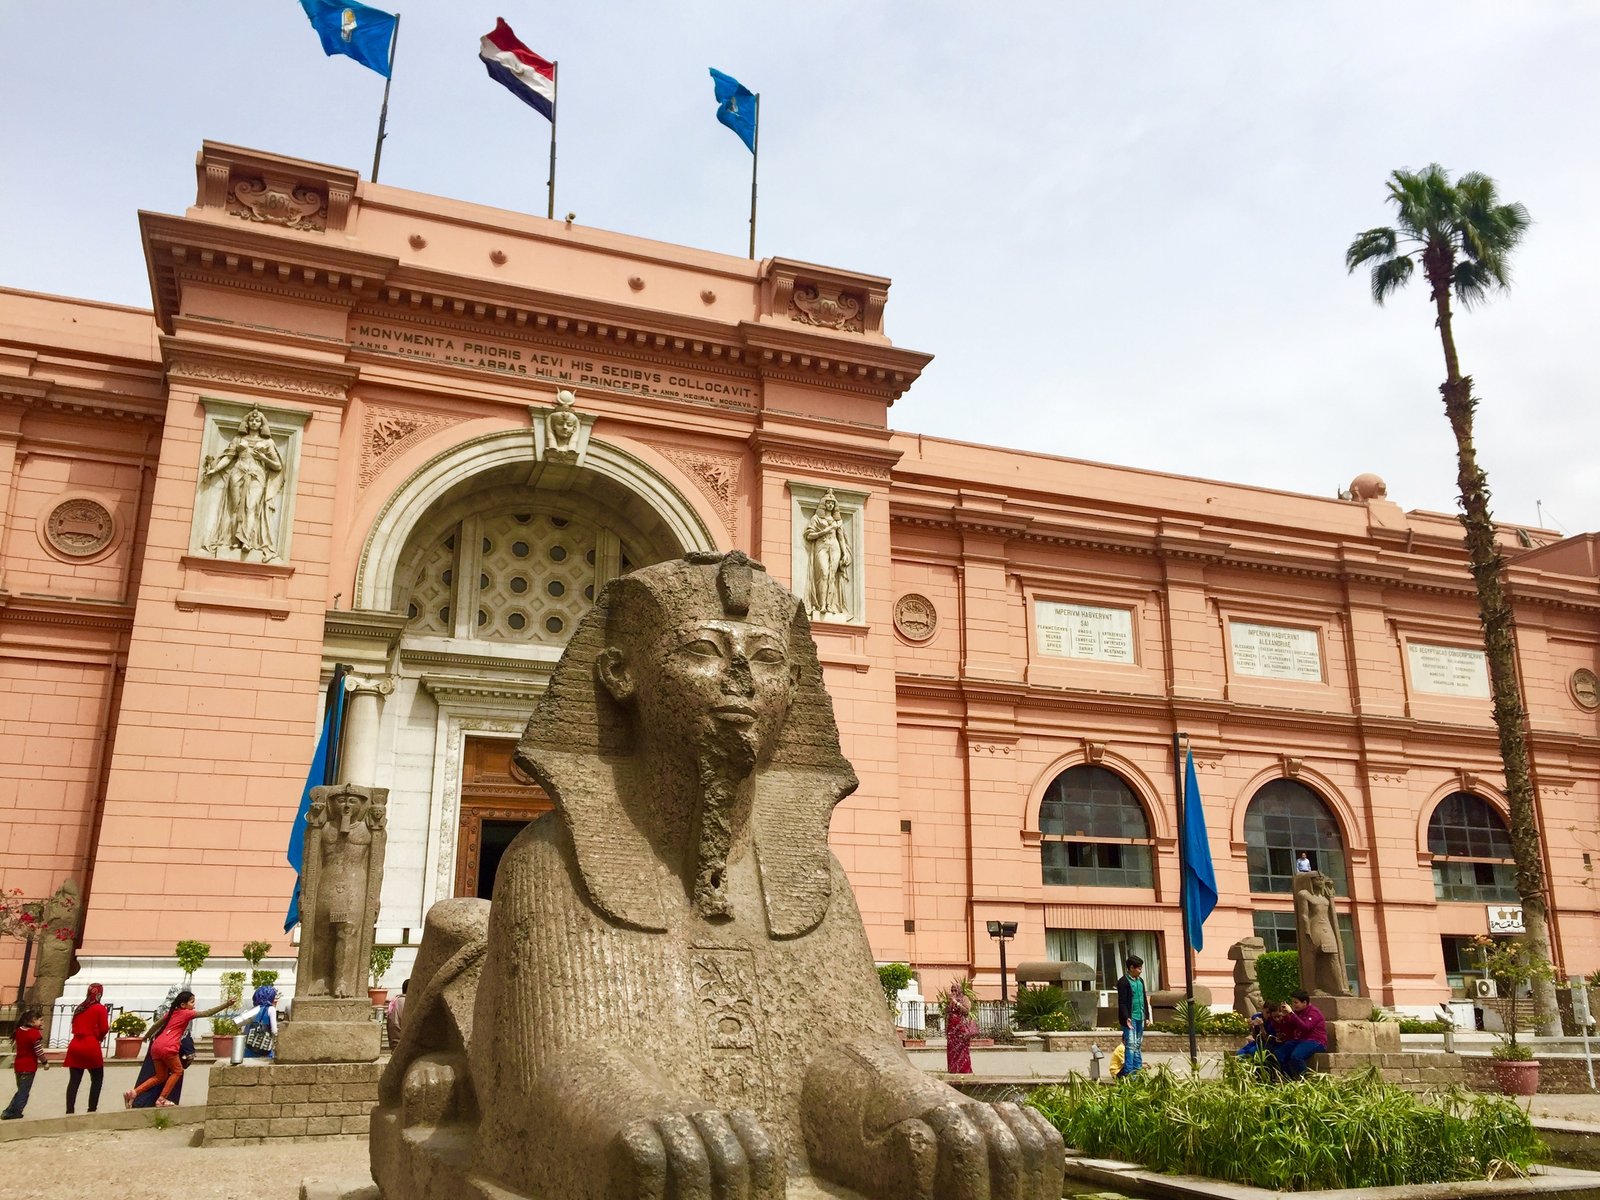 museum tour cairo